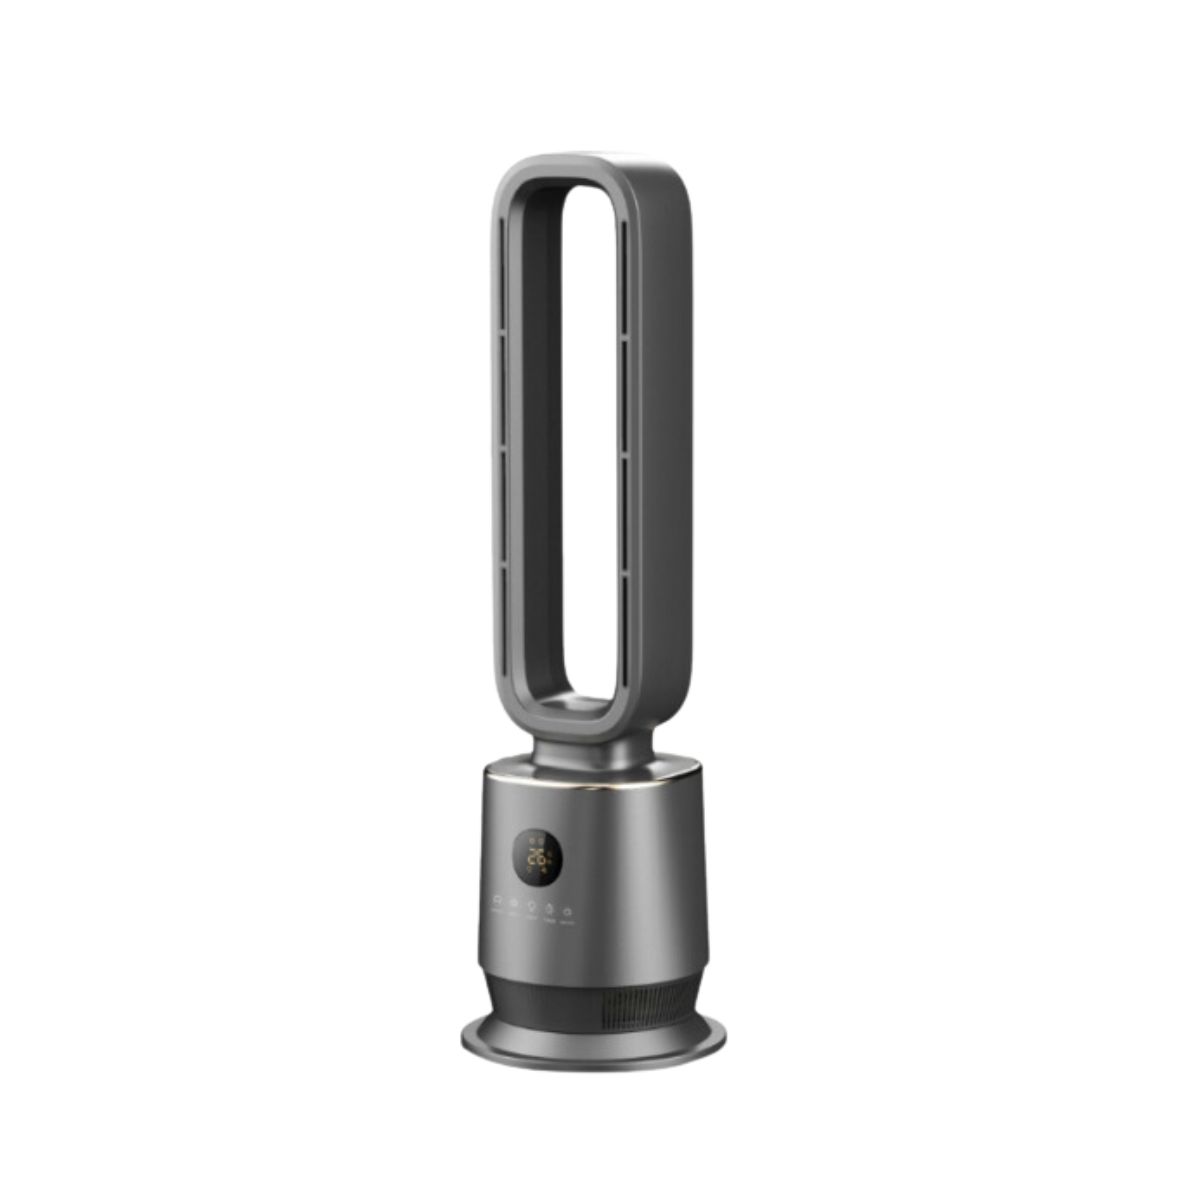 KOOLEN Electric Heater Vertical Decor, 2000W, Gray - 807102051